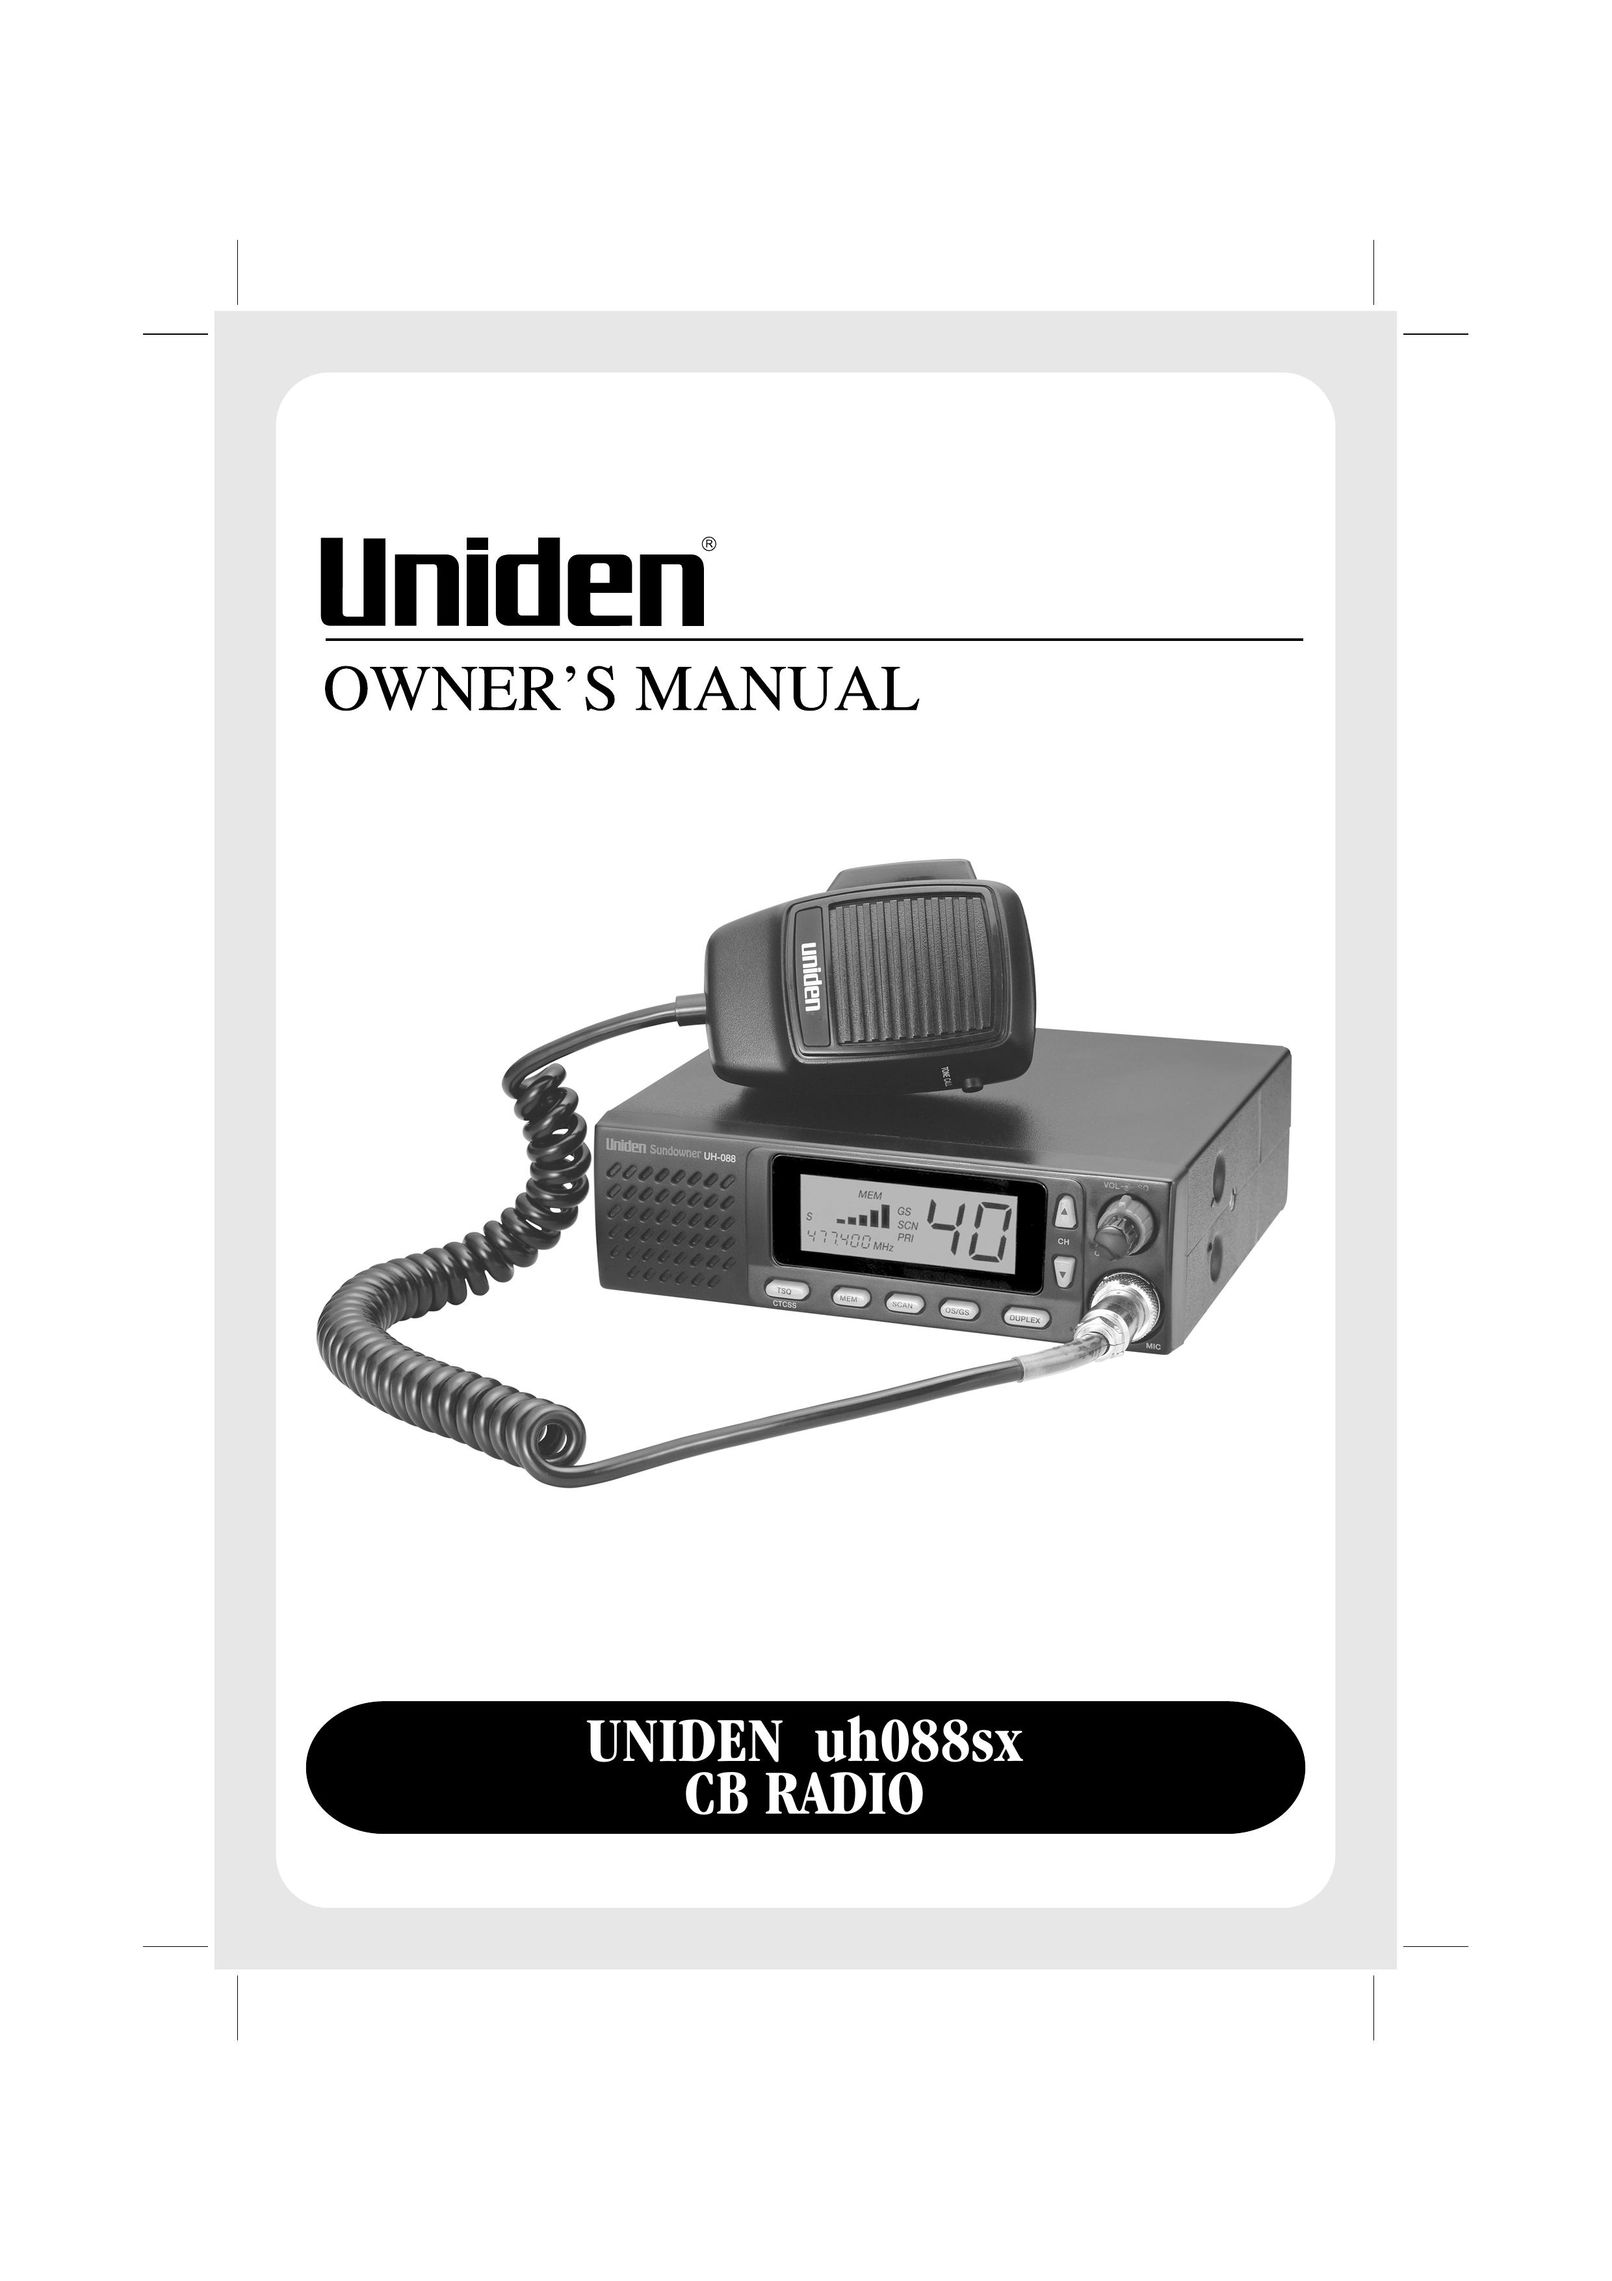 Uniden UH088sx Portable Radio User Manual